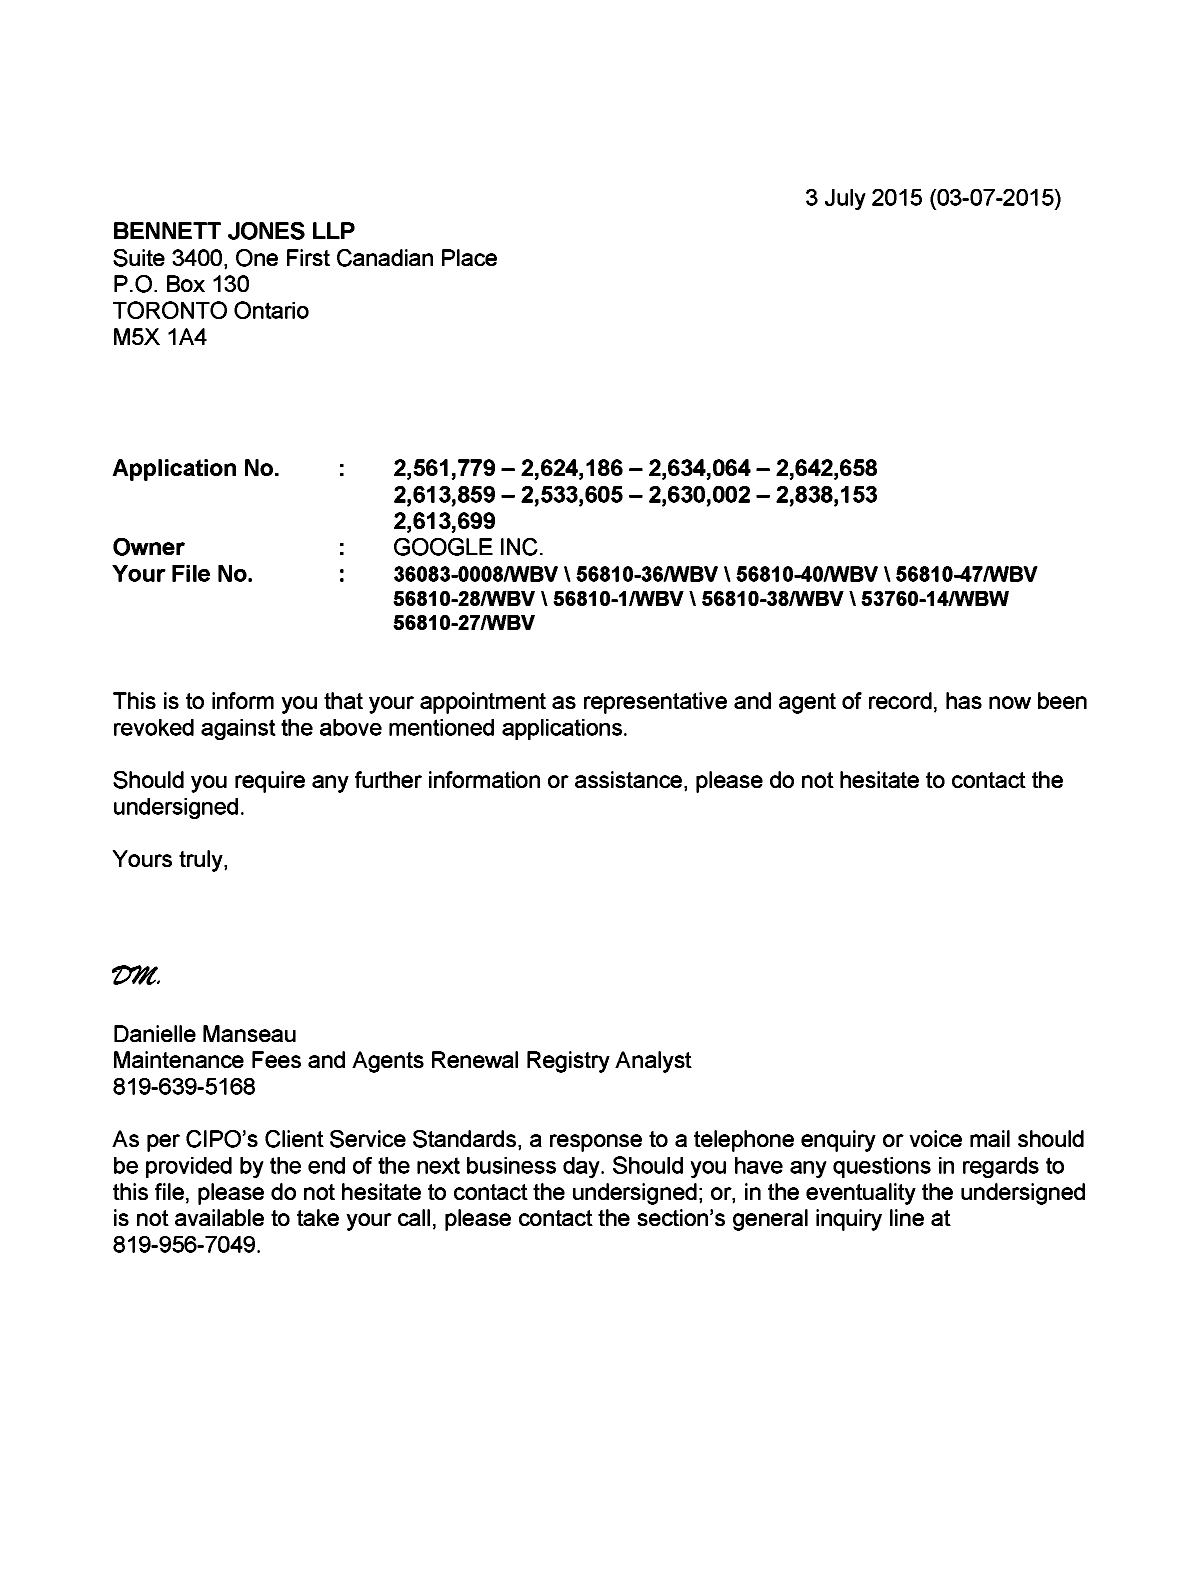 Canadian Patent Document 2533605. Correspondence 20150703. Image 1 of 1